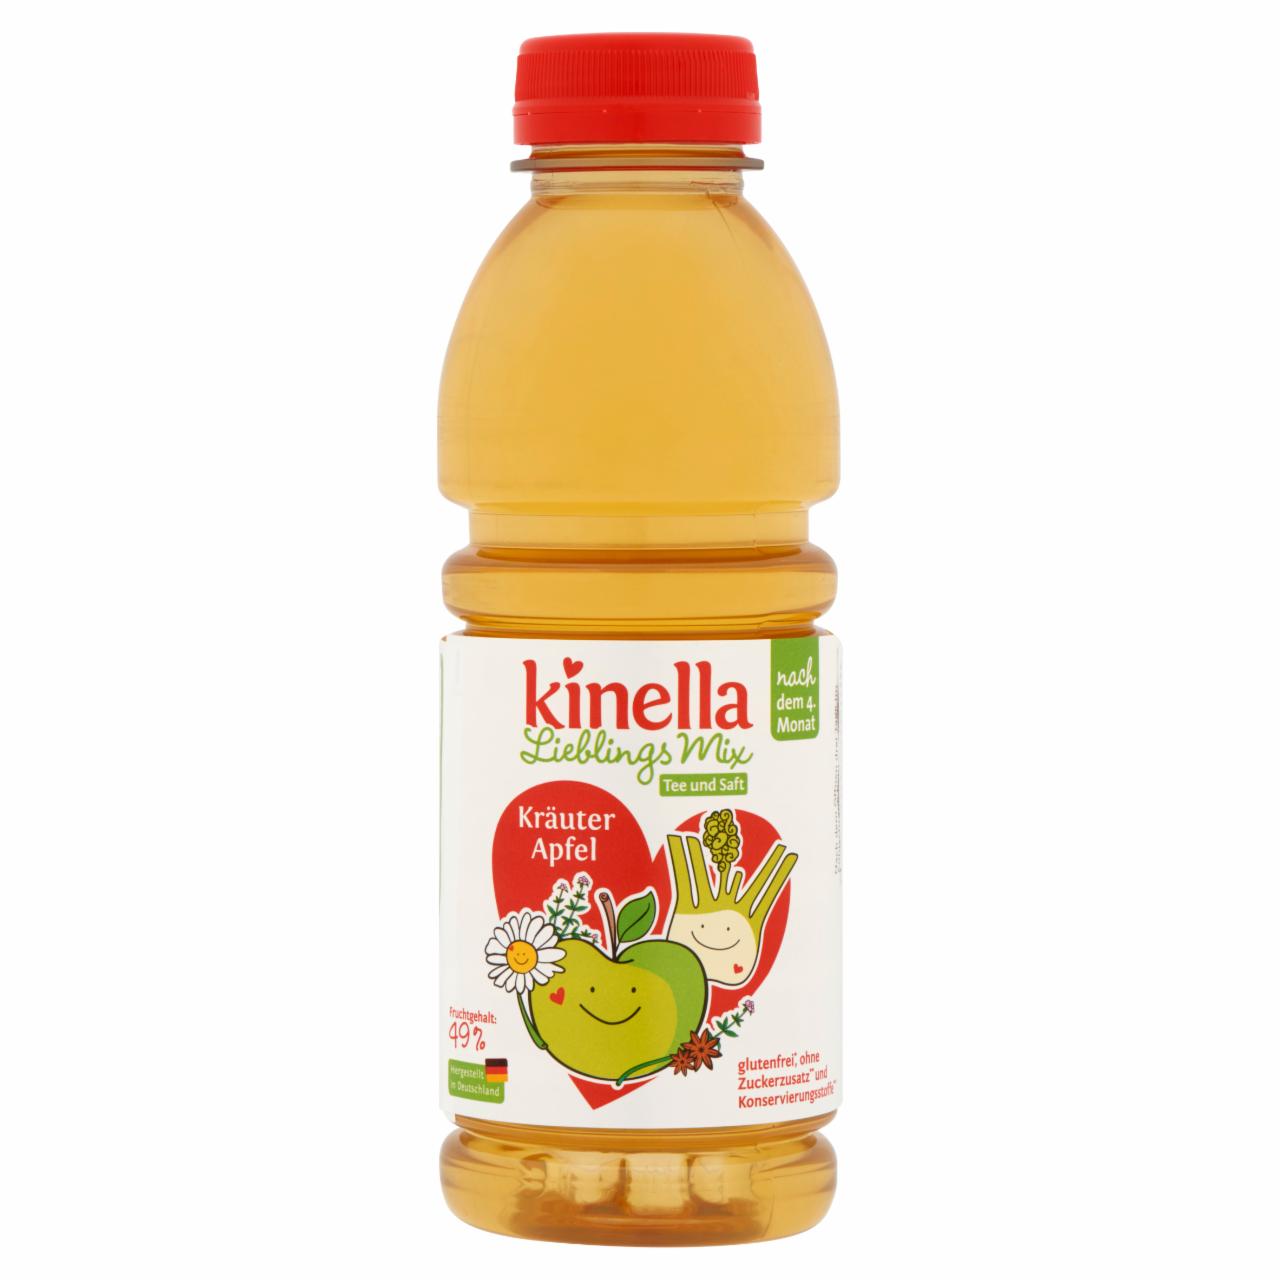 Képek - Kinella herba tea & almajuice 4 hó 500 ml